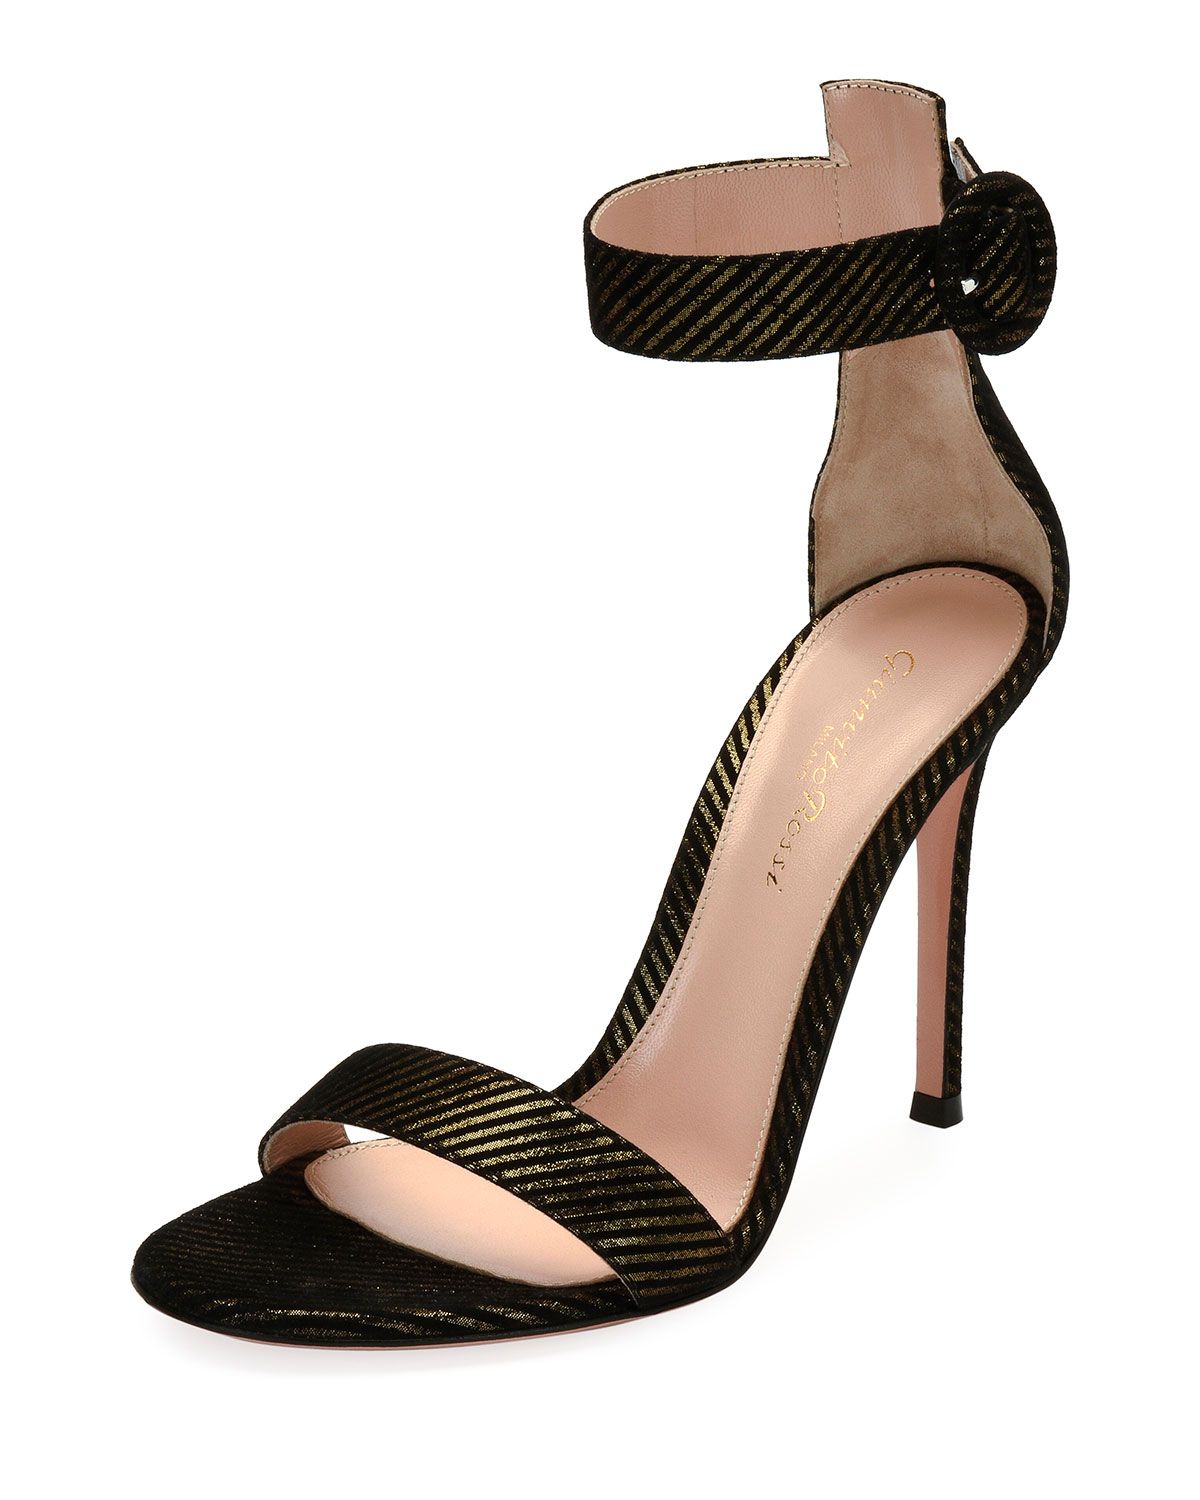 Portofino 105 Striped Suede Sandals, Black/Gold | Bergdorf Goodman